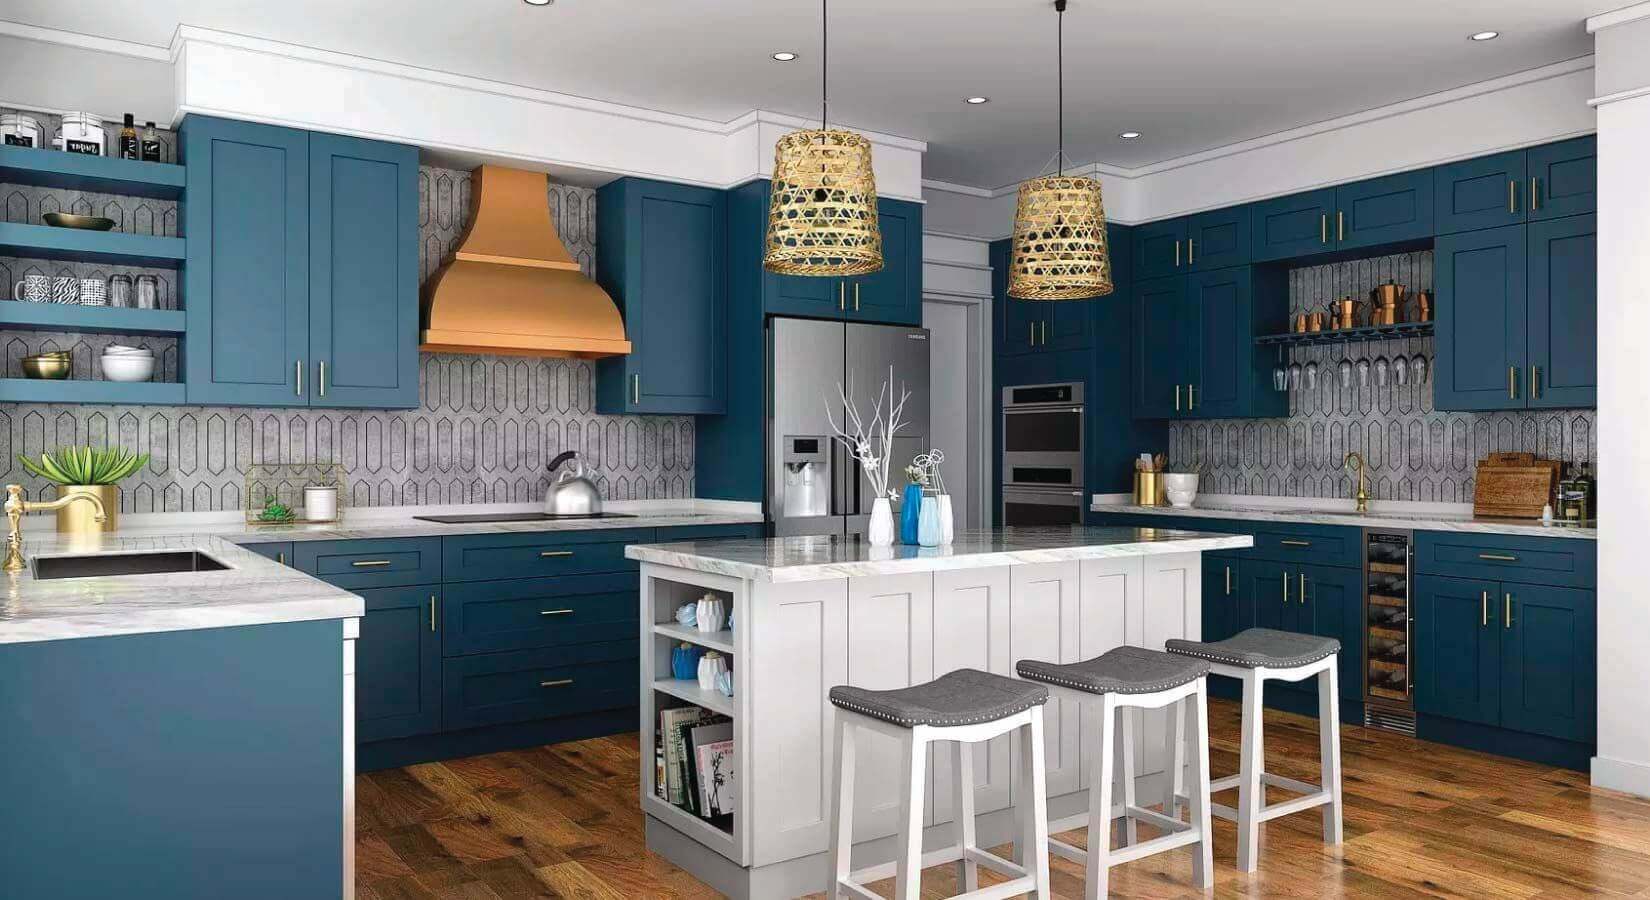 Kitchen with dark blue cabinets, gray tile backsplash, and gray barstools.